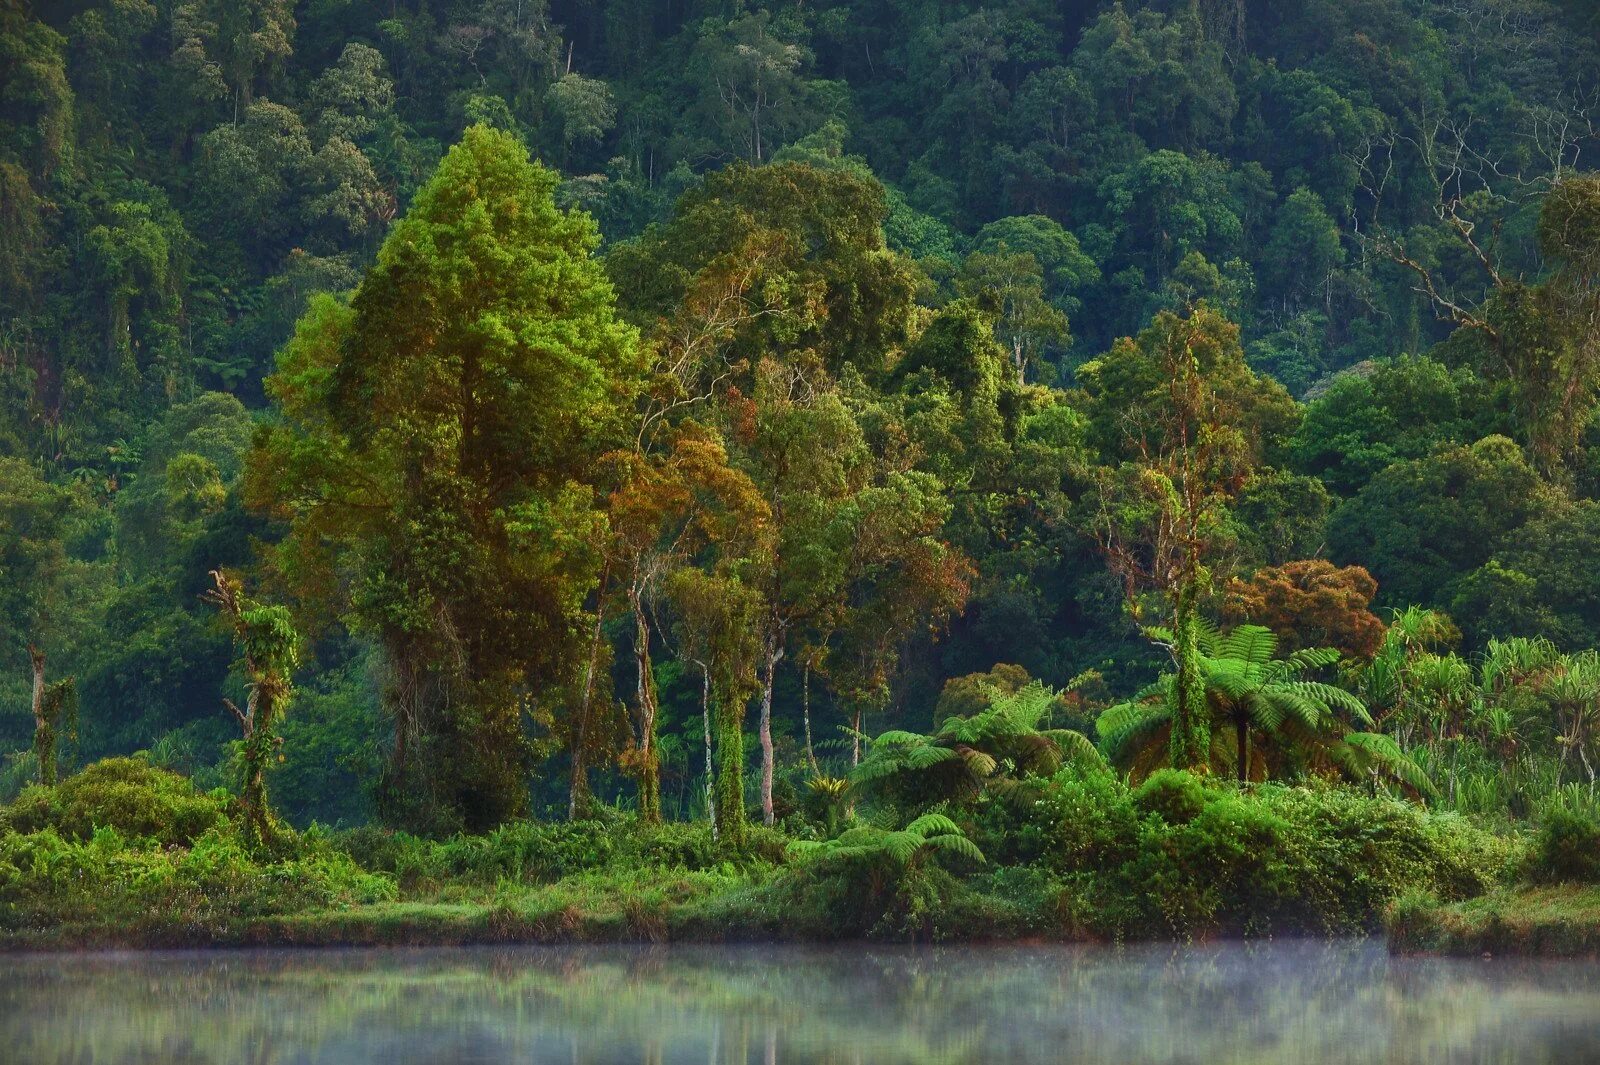 Ресурсы малайзии. Джунгли Борнео Индонезия. Индонезия тропические леса Суматры. Суматра климат джунгли. Влажные тропические леса Борнео.